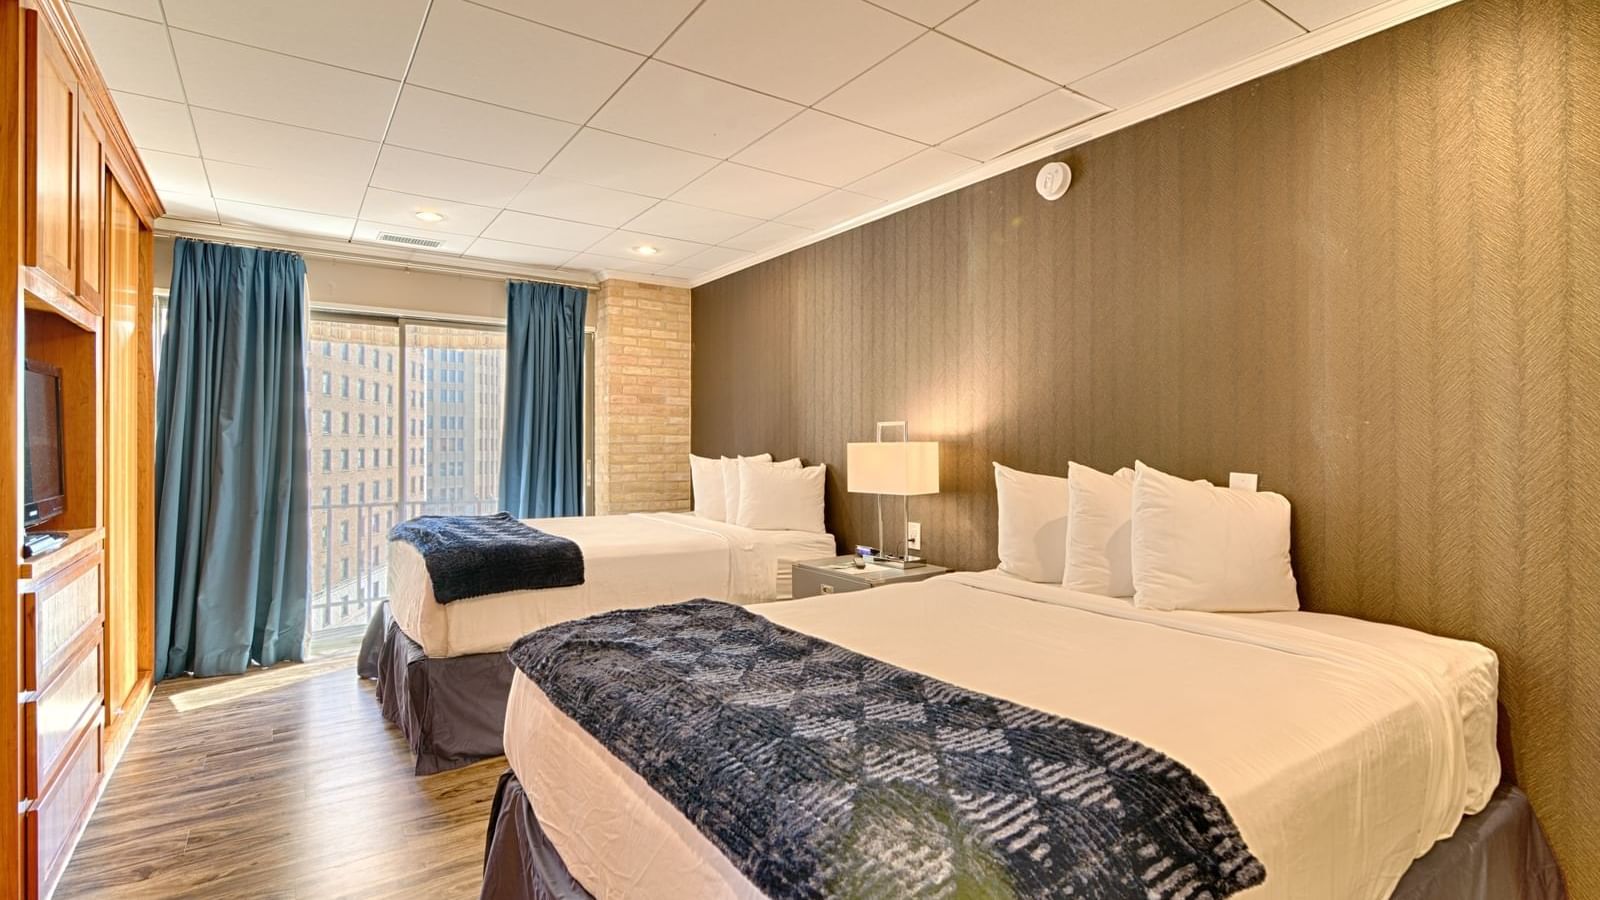 Holiday Inn® Hotel Bedding